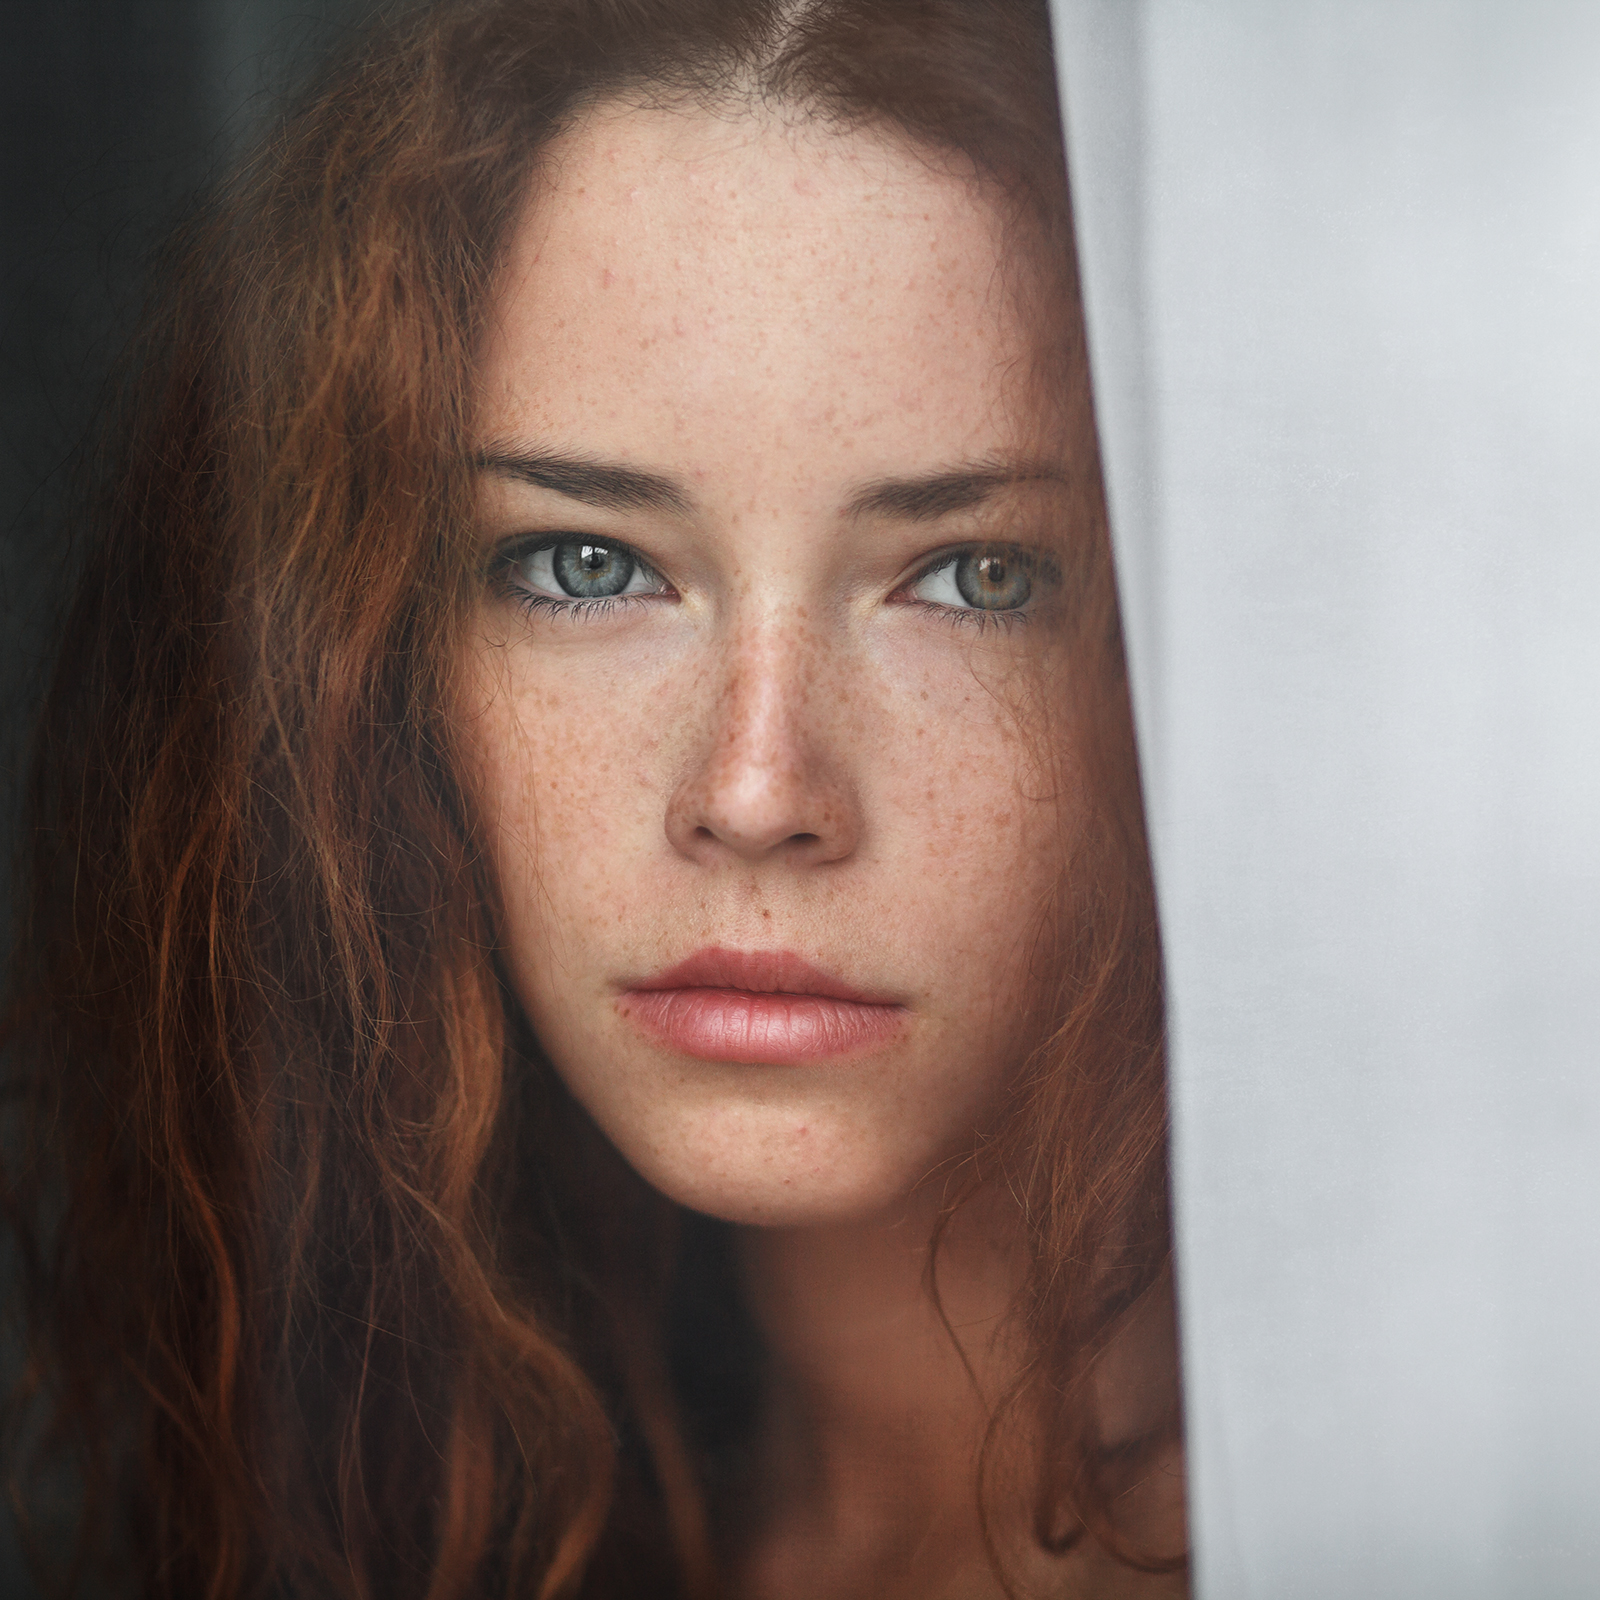 People 1600x1600 Ivan Ustinov women redhead wavy hair blue eyes freckles makeup eyeliner portrait white model face Anna Zabolotskaya